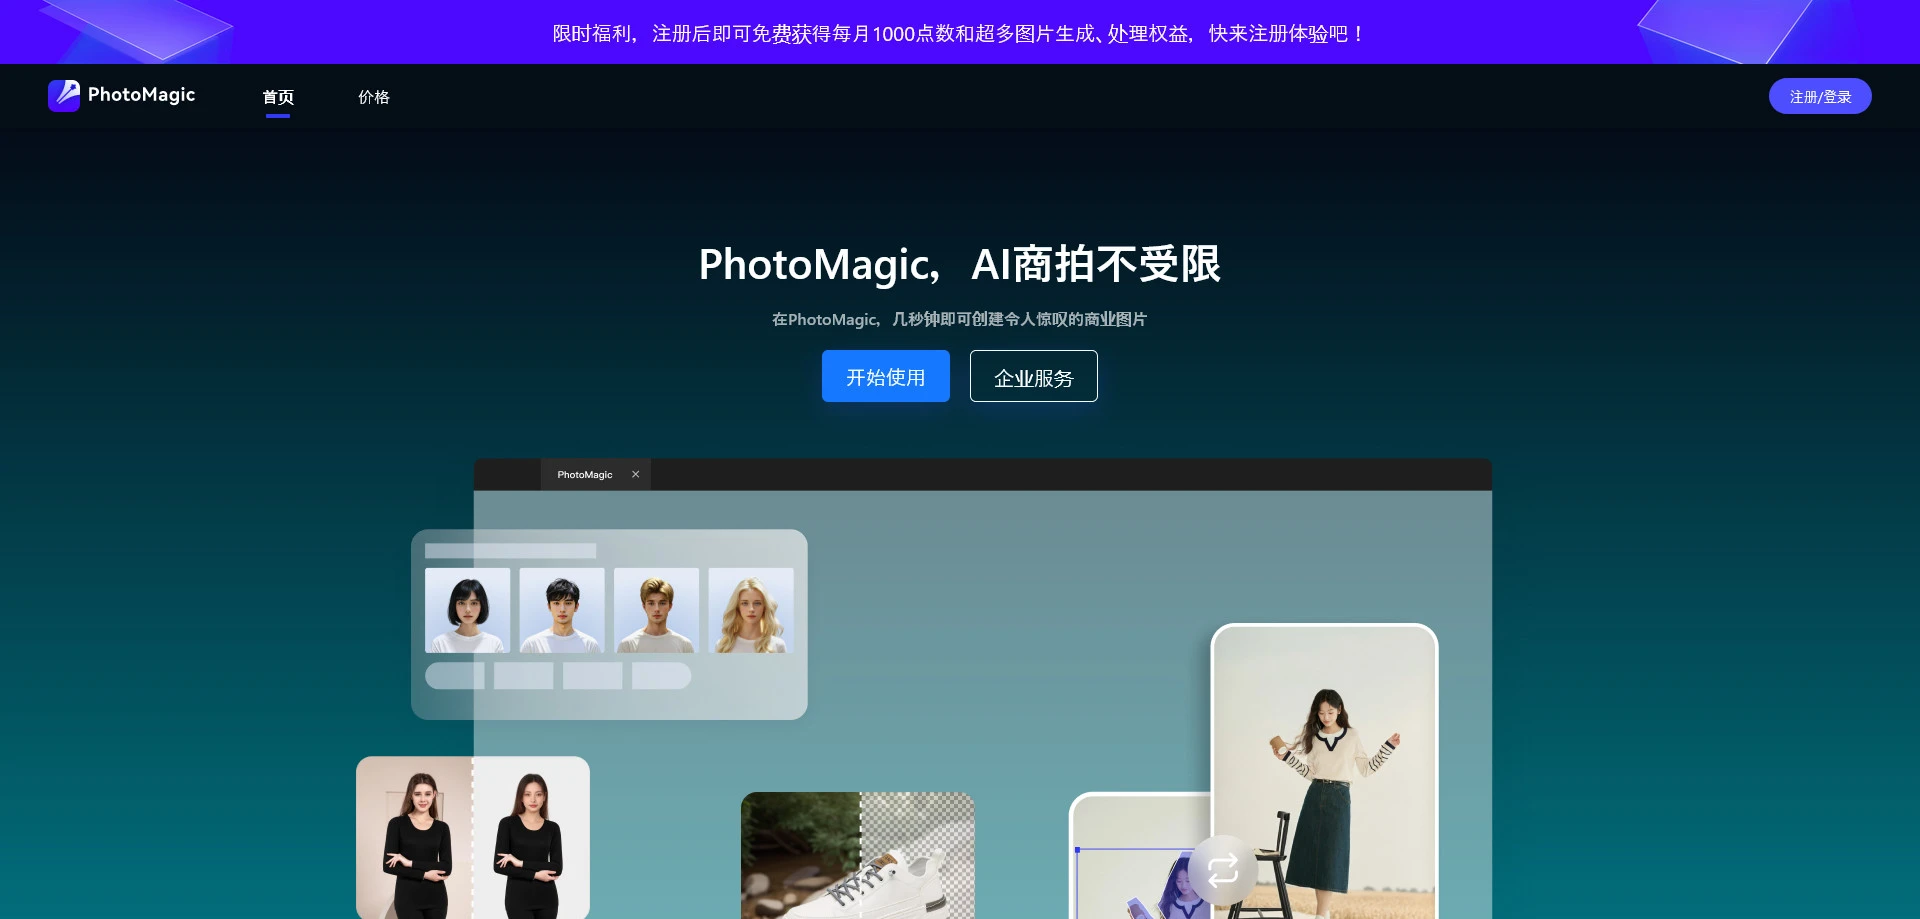 AI工具与服务推荐 - PhotoMagic - AI图片生成工具 - 特色图片